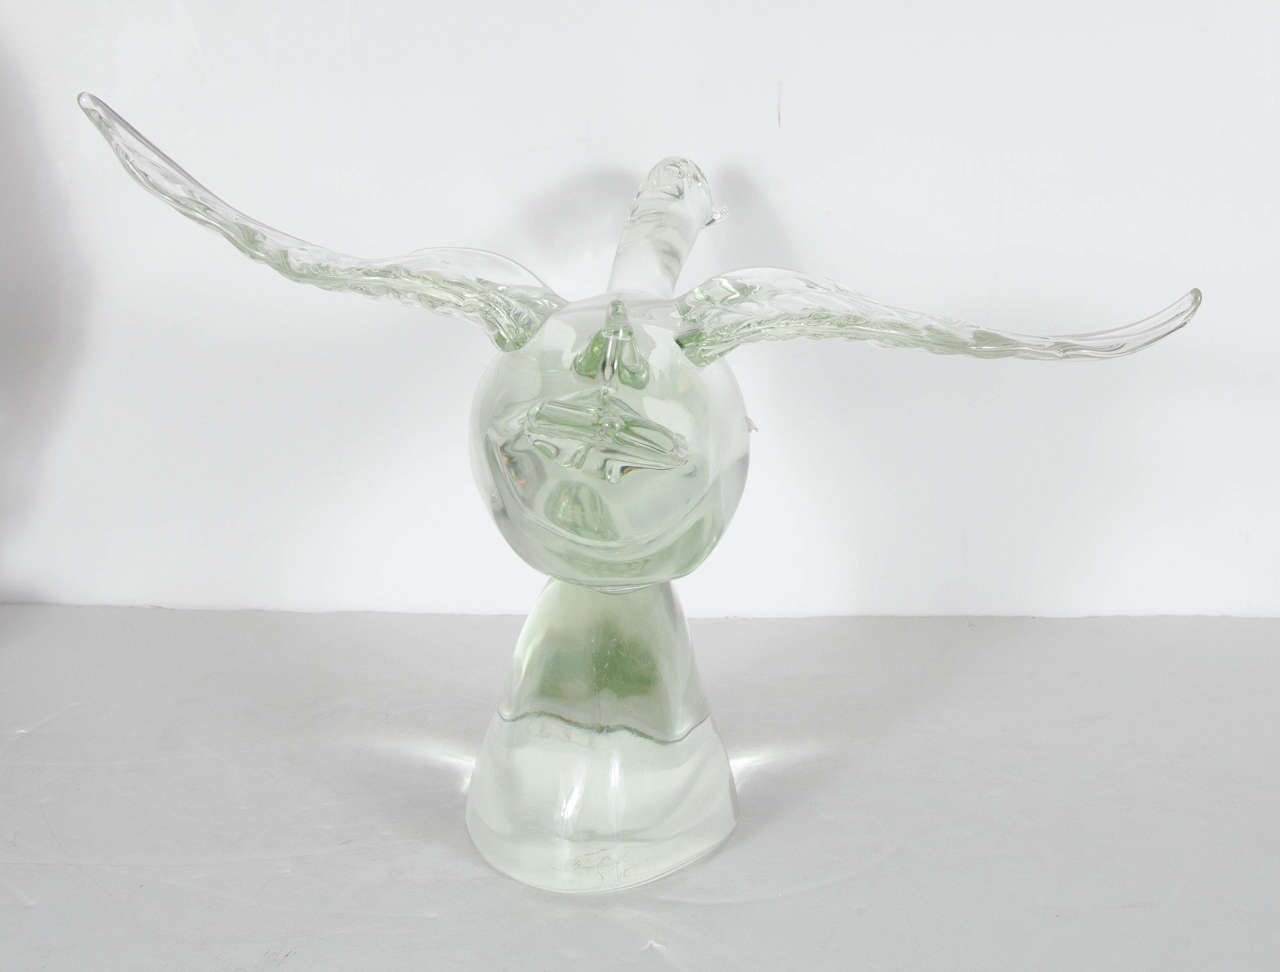 Superb Mid-Century Modernist Handblown Glass Canadian Goose By Licio Zanetti 1